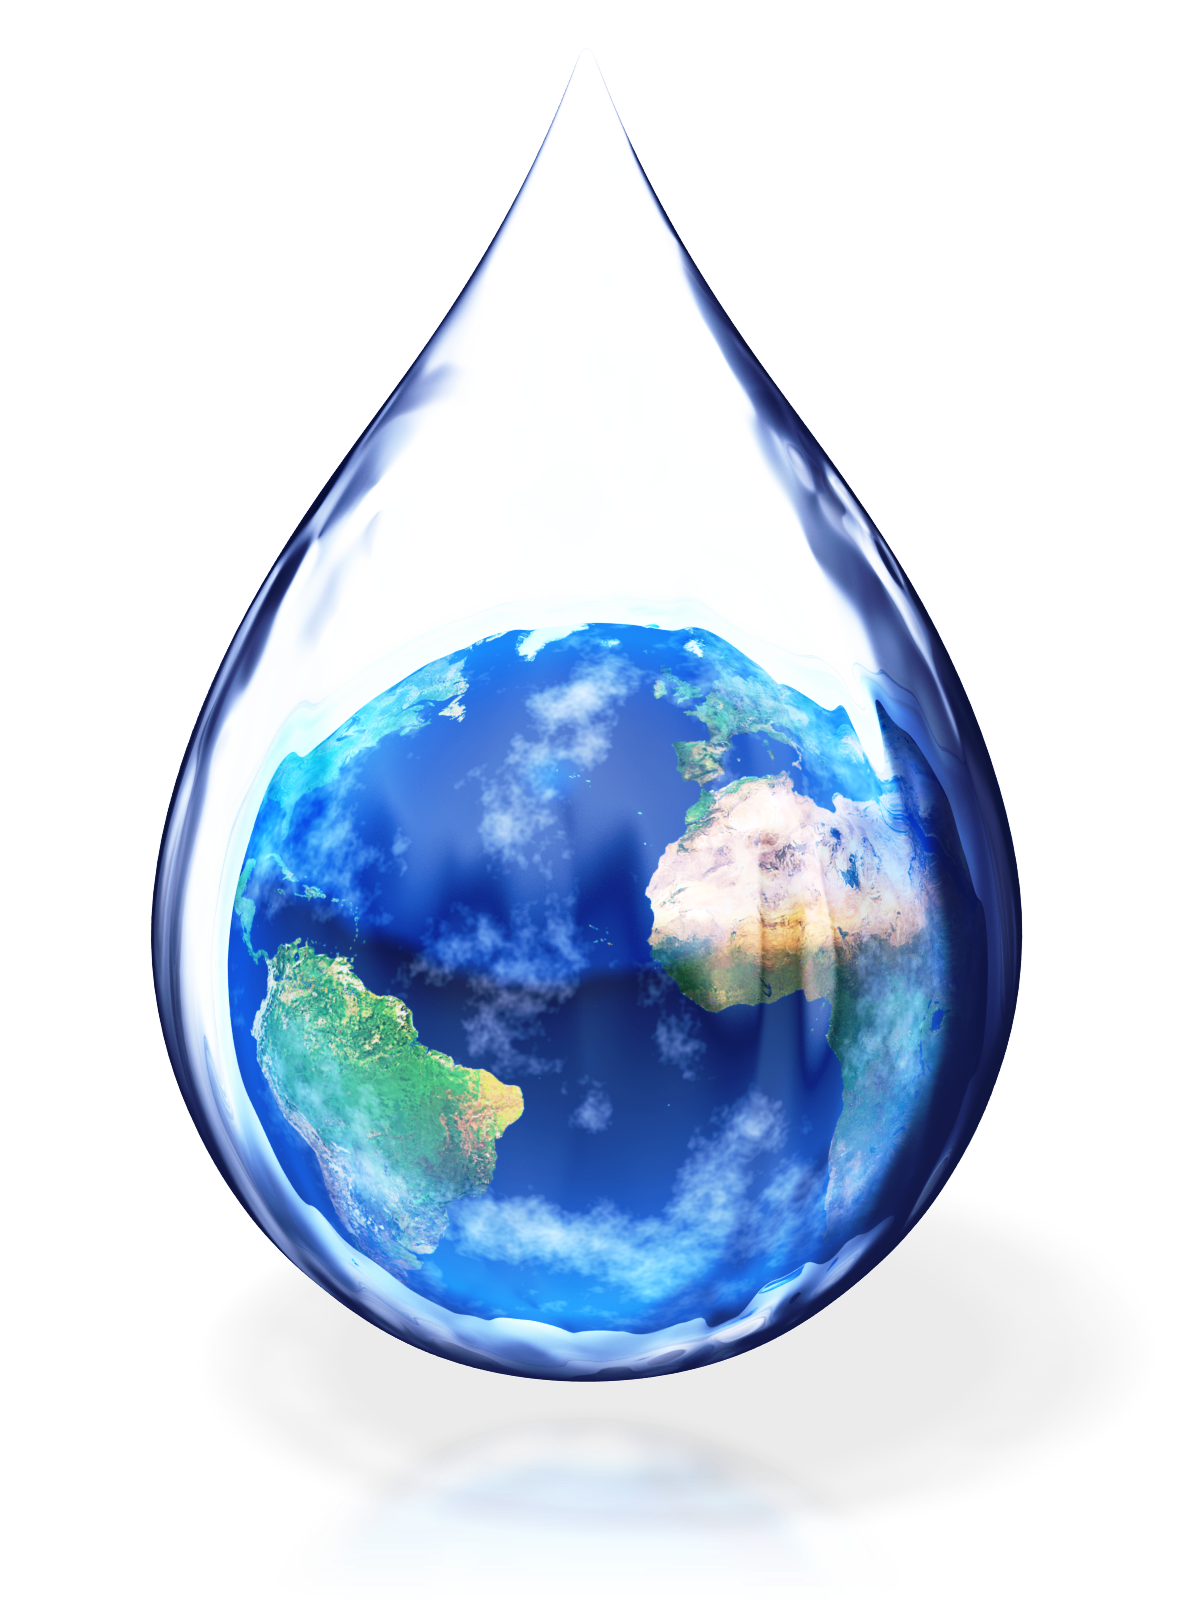  Earth  water  Logos